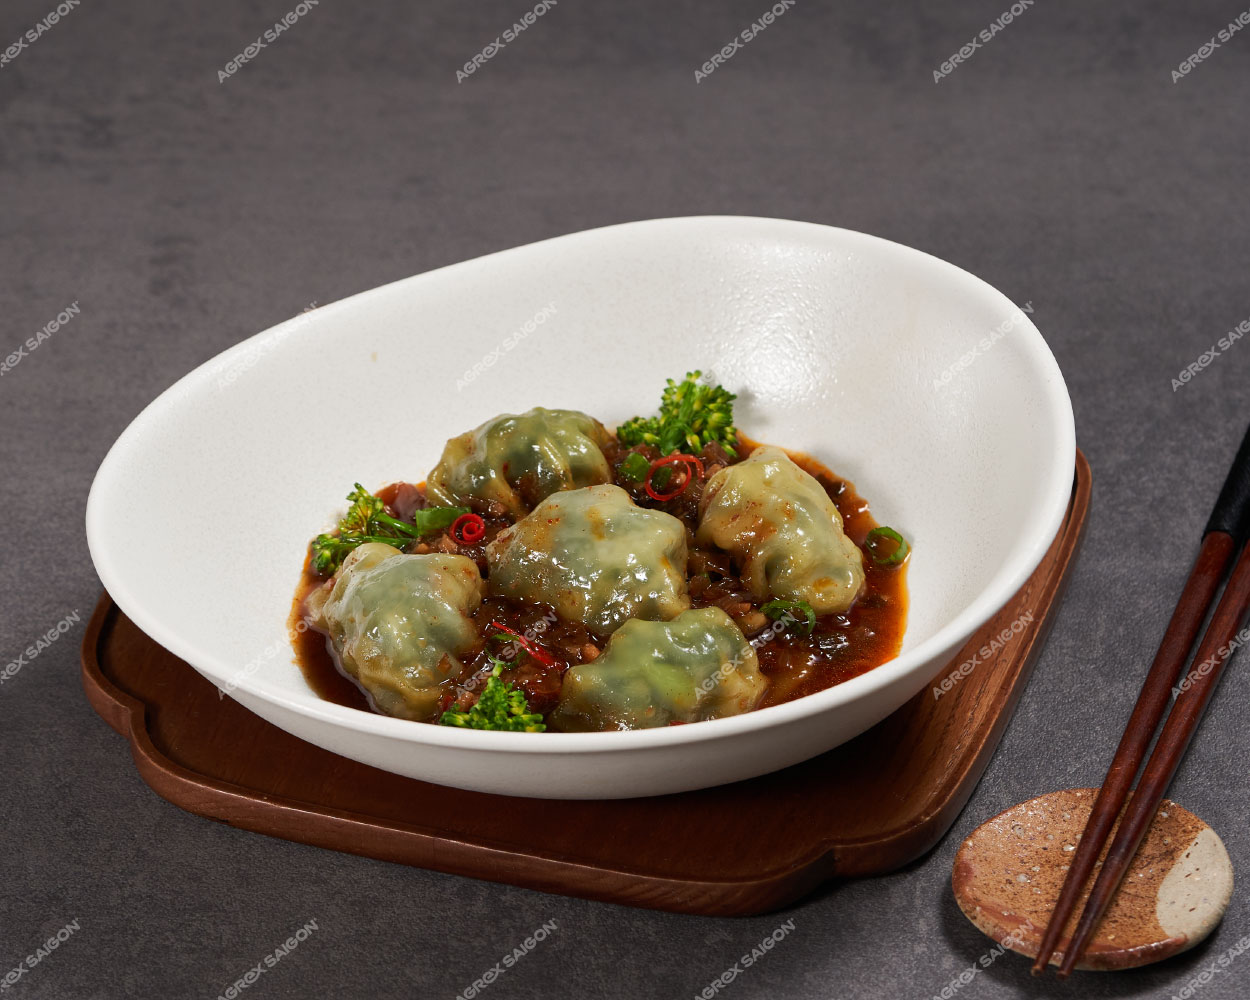 Vegetable dumpling with sichuan sauce